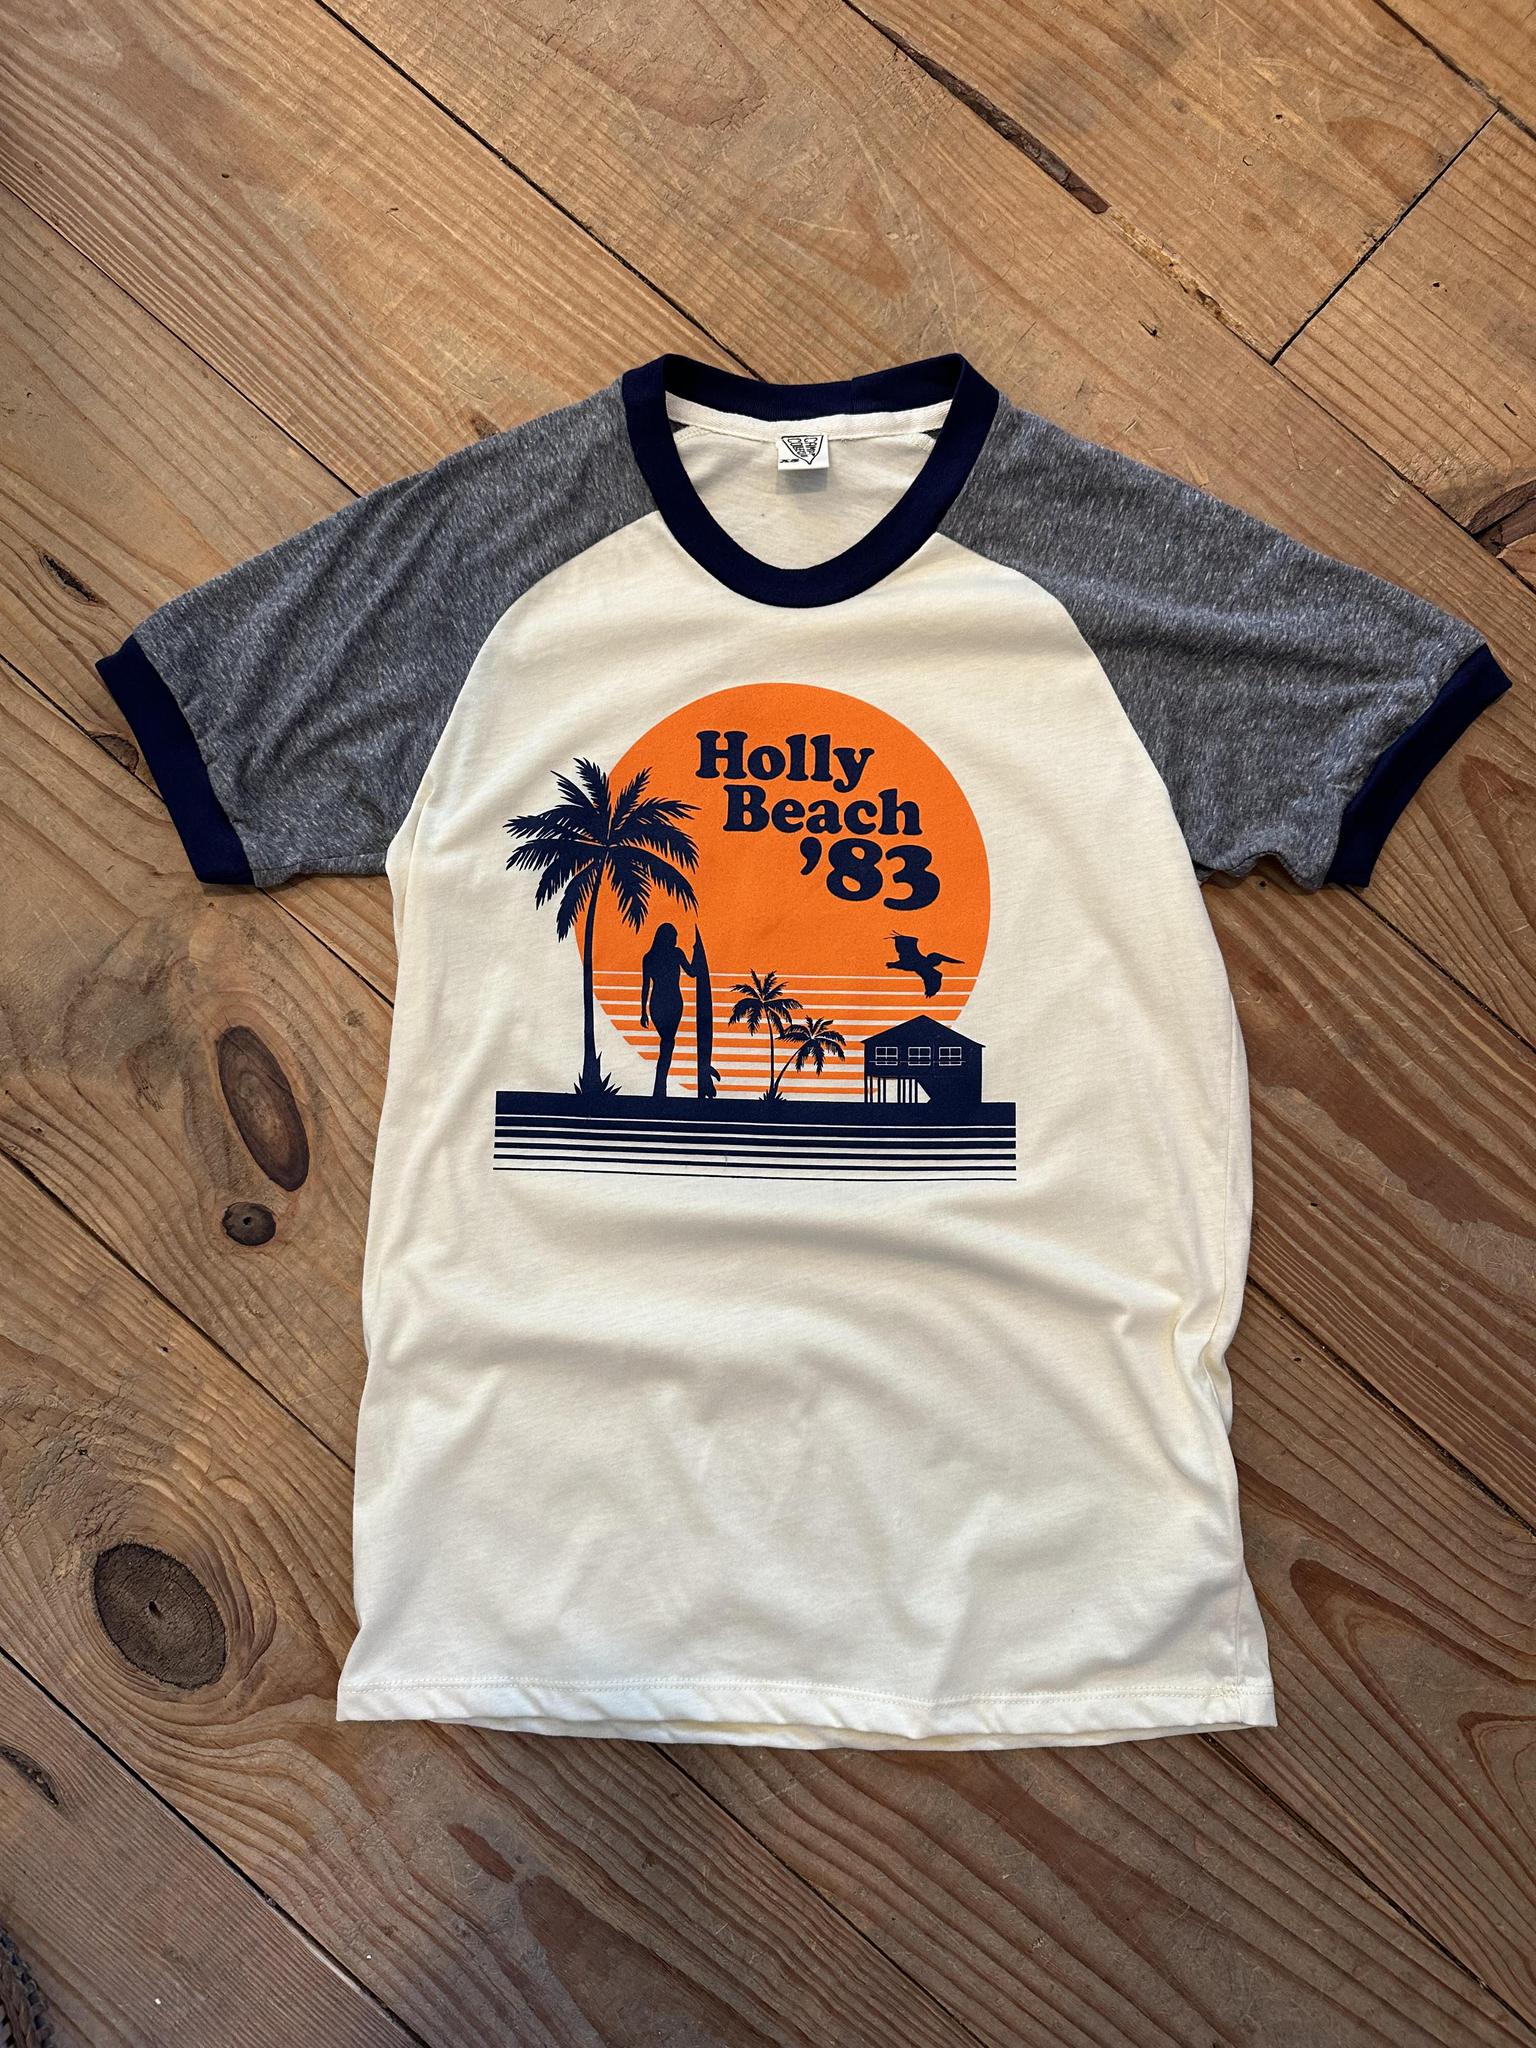 Holly Beach Tee - White/Heather Grey/Navy